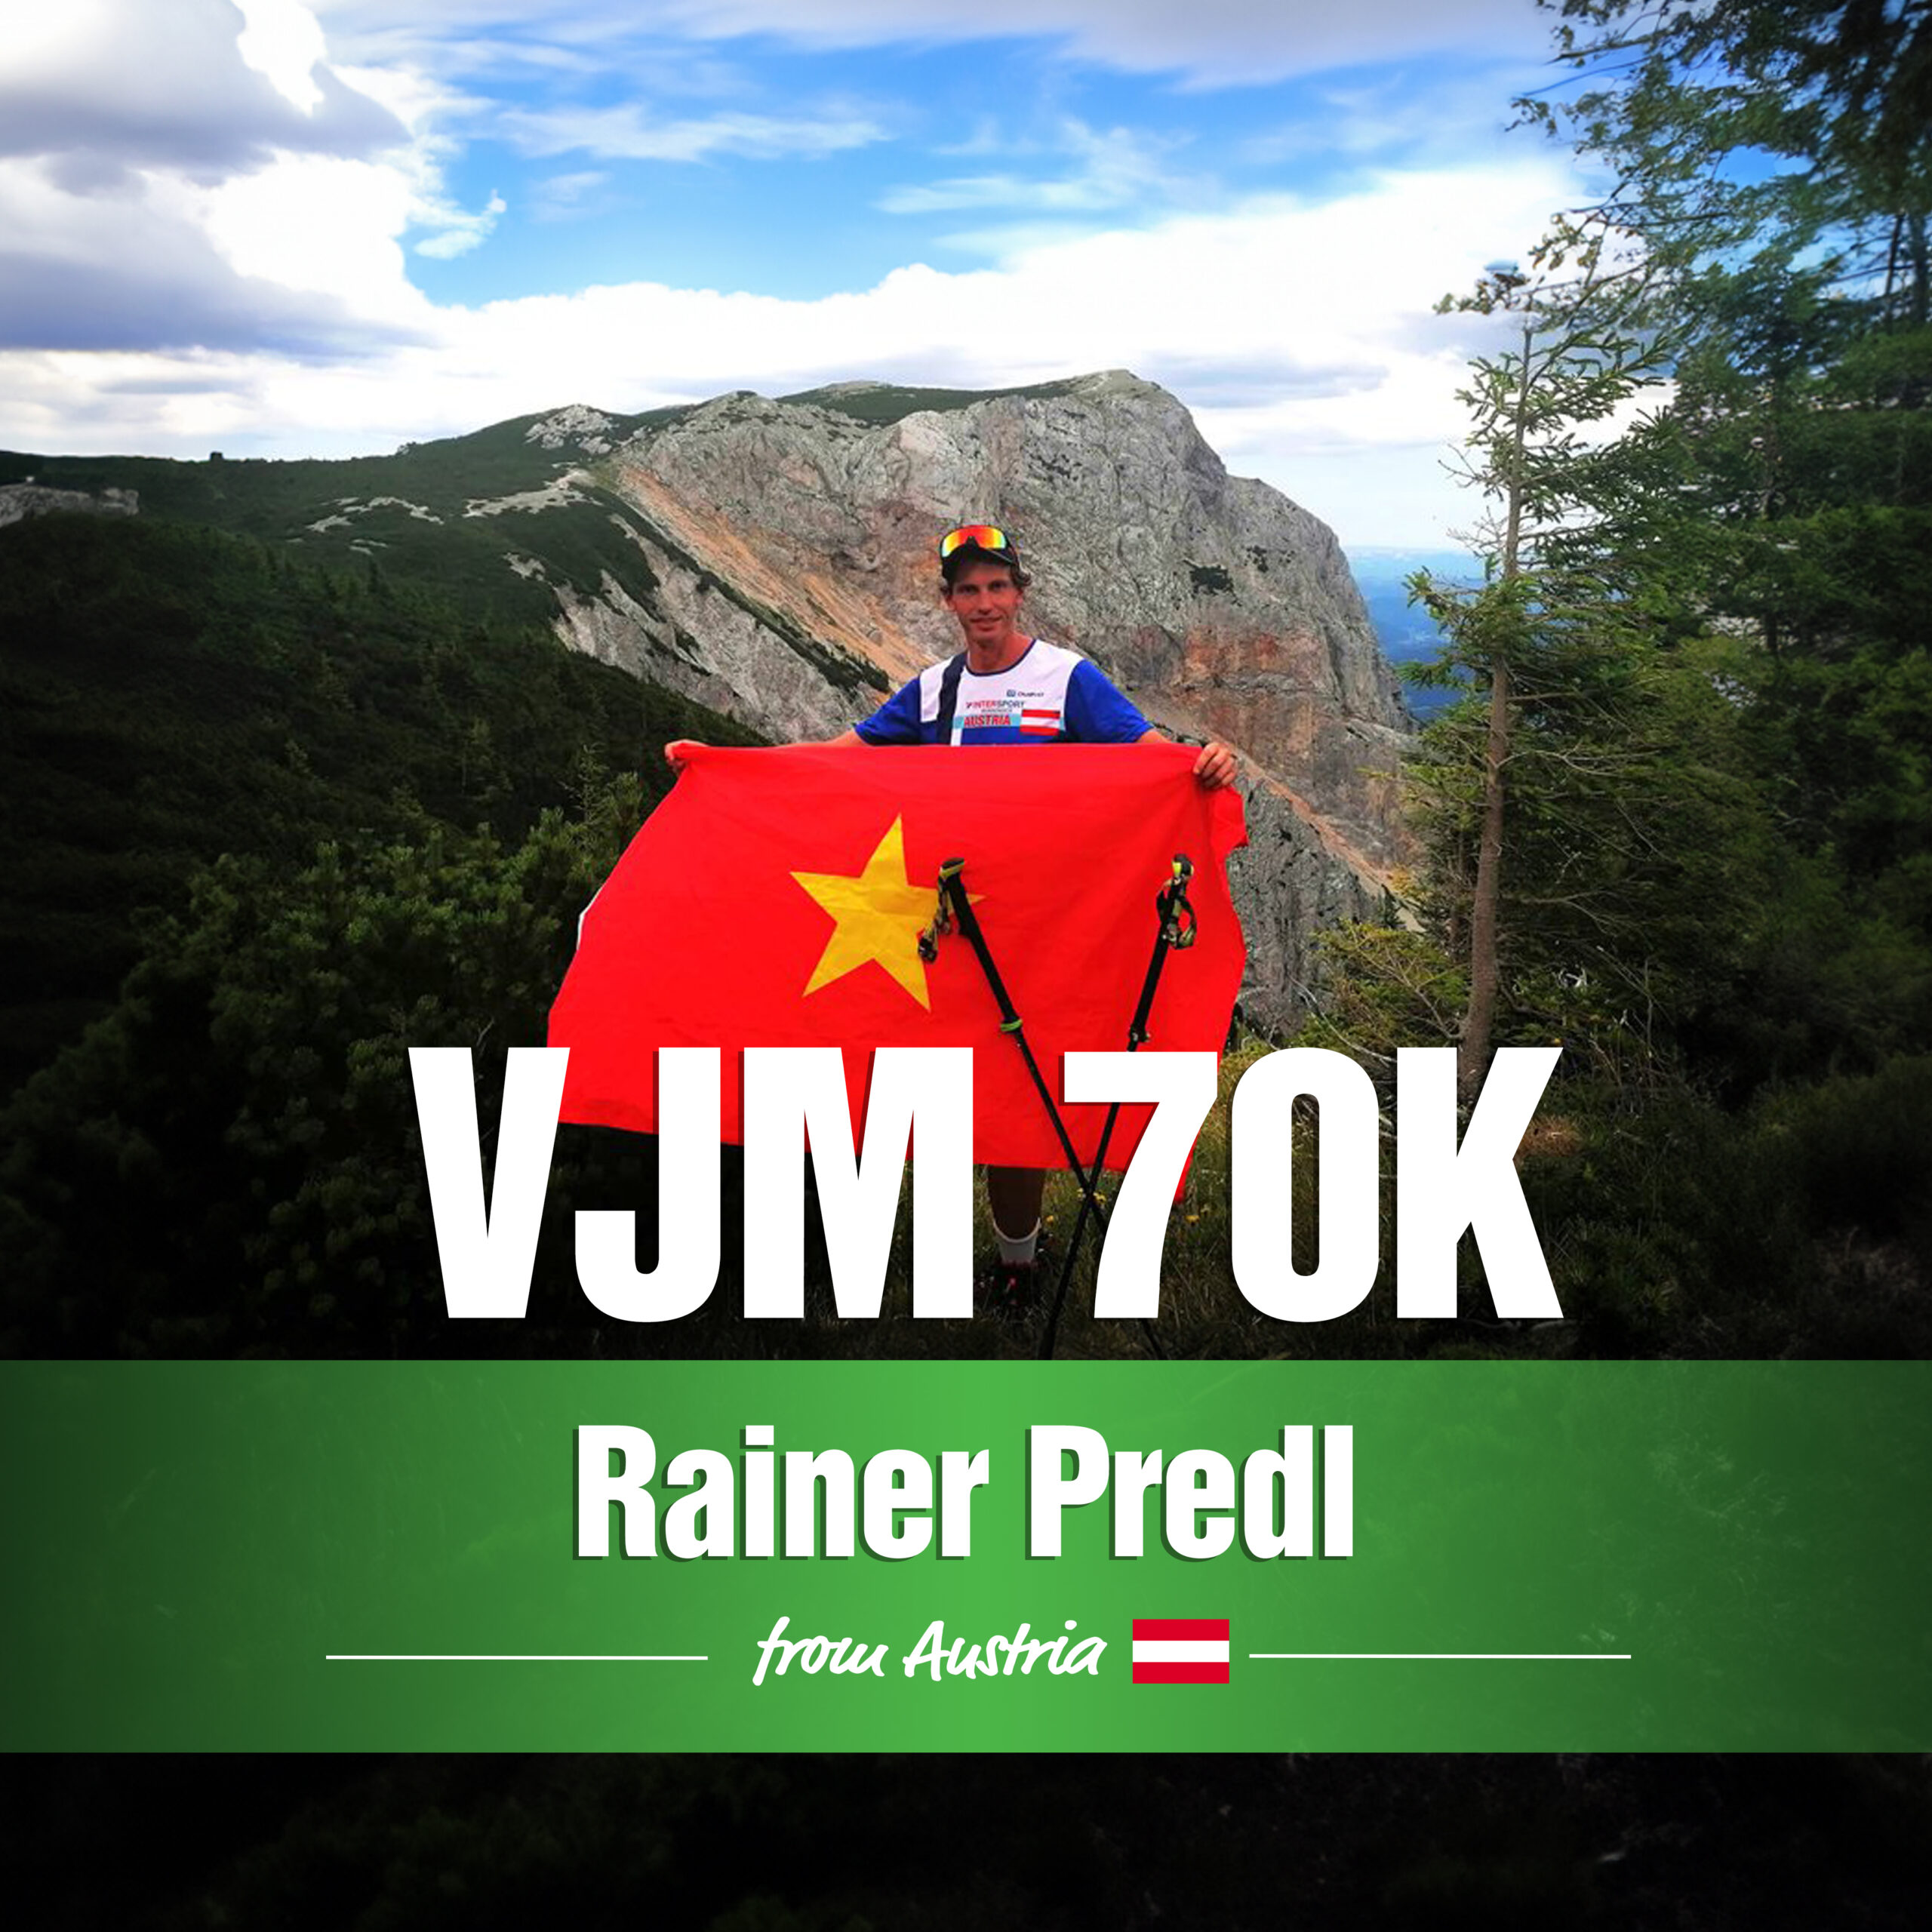 VJM 70k - Rainer Predl